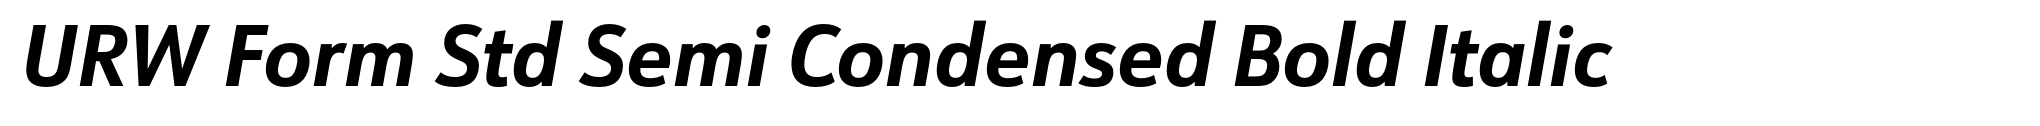 URW Form Std Semi Condensed Bold Italic image